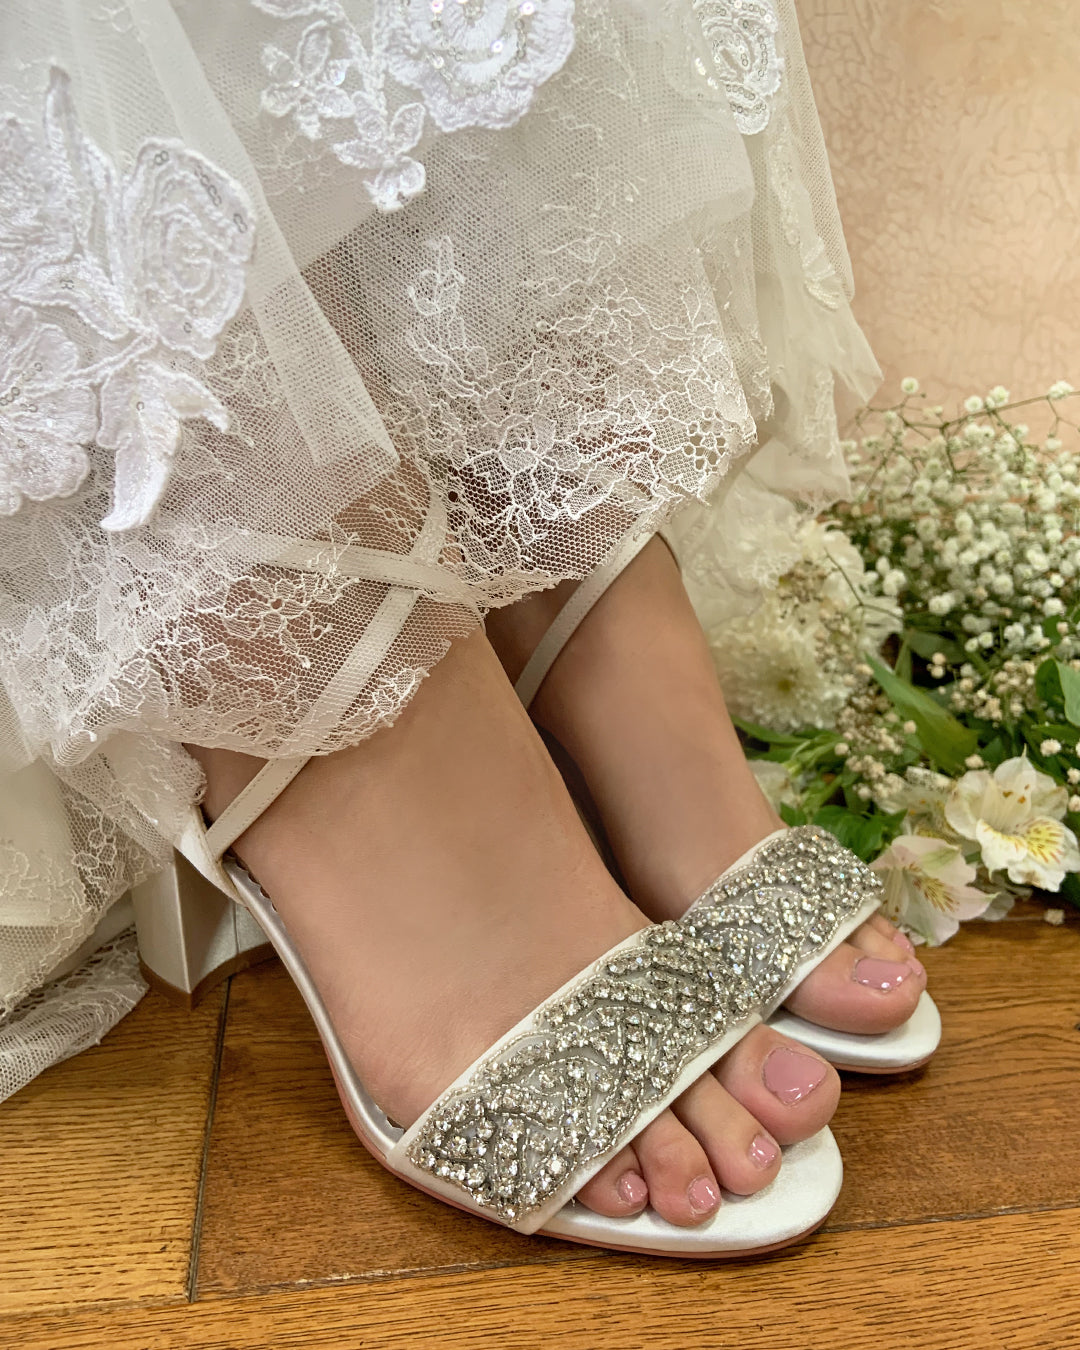 Blair wide fit ivory diamanté block heels